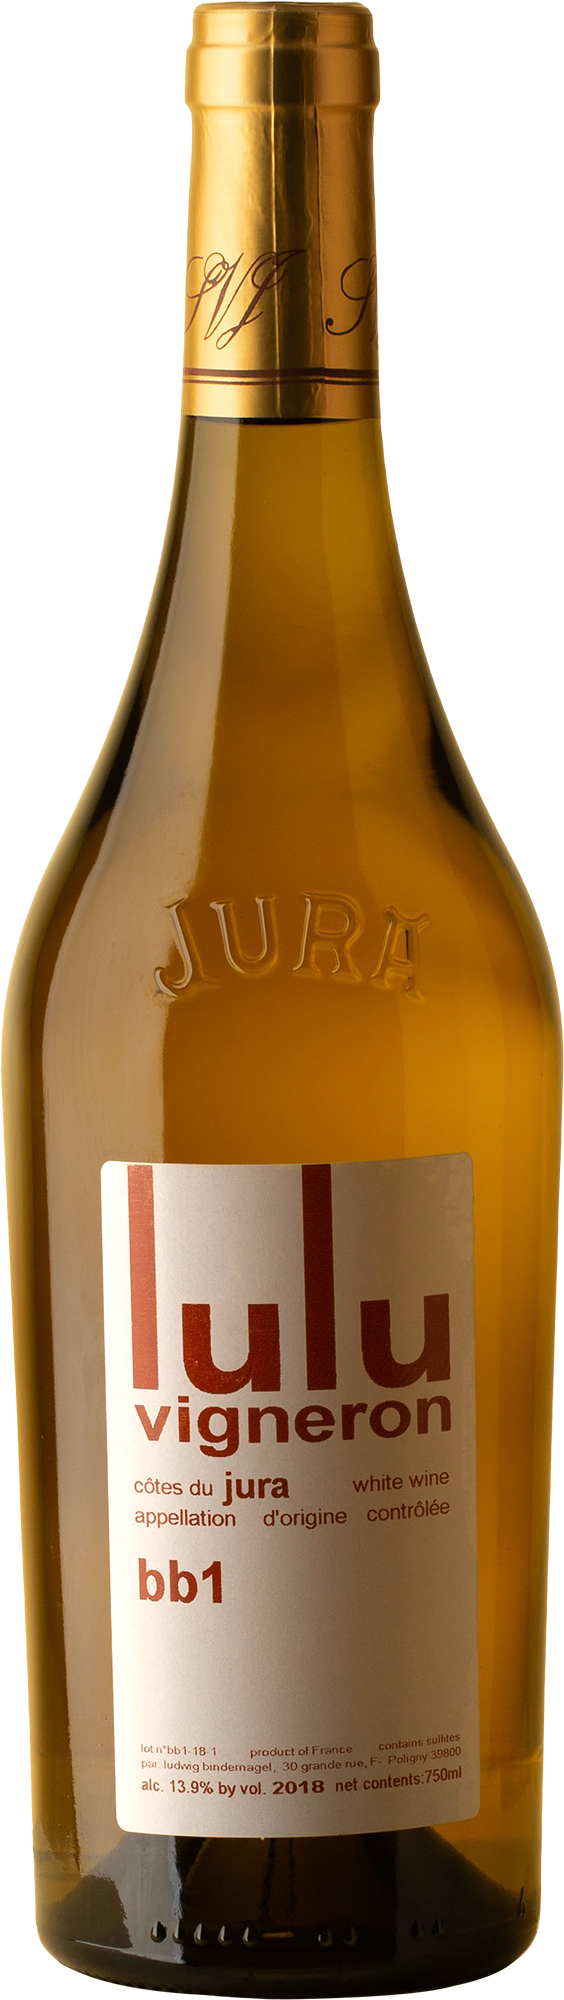 Lulu Vigneron - BB1 Chardonnay / Savagnin 2018 White Wine